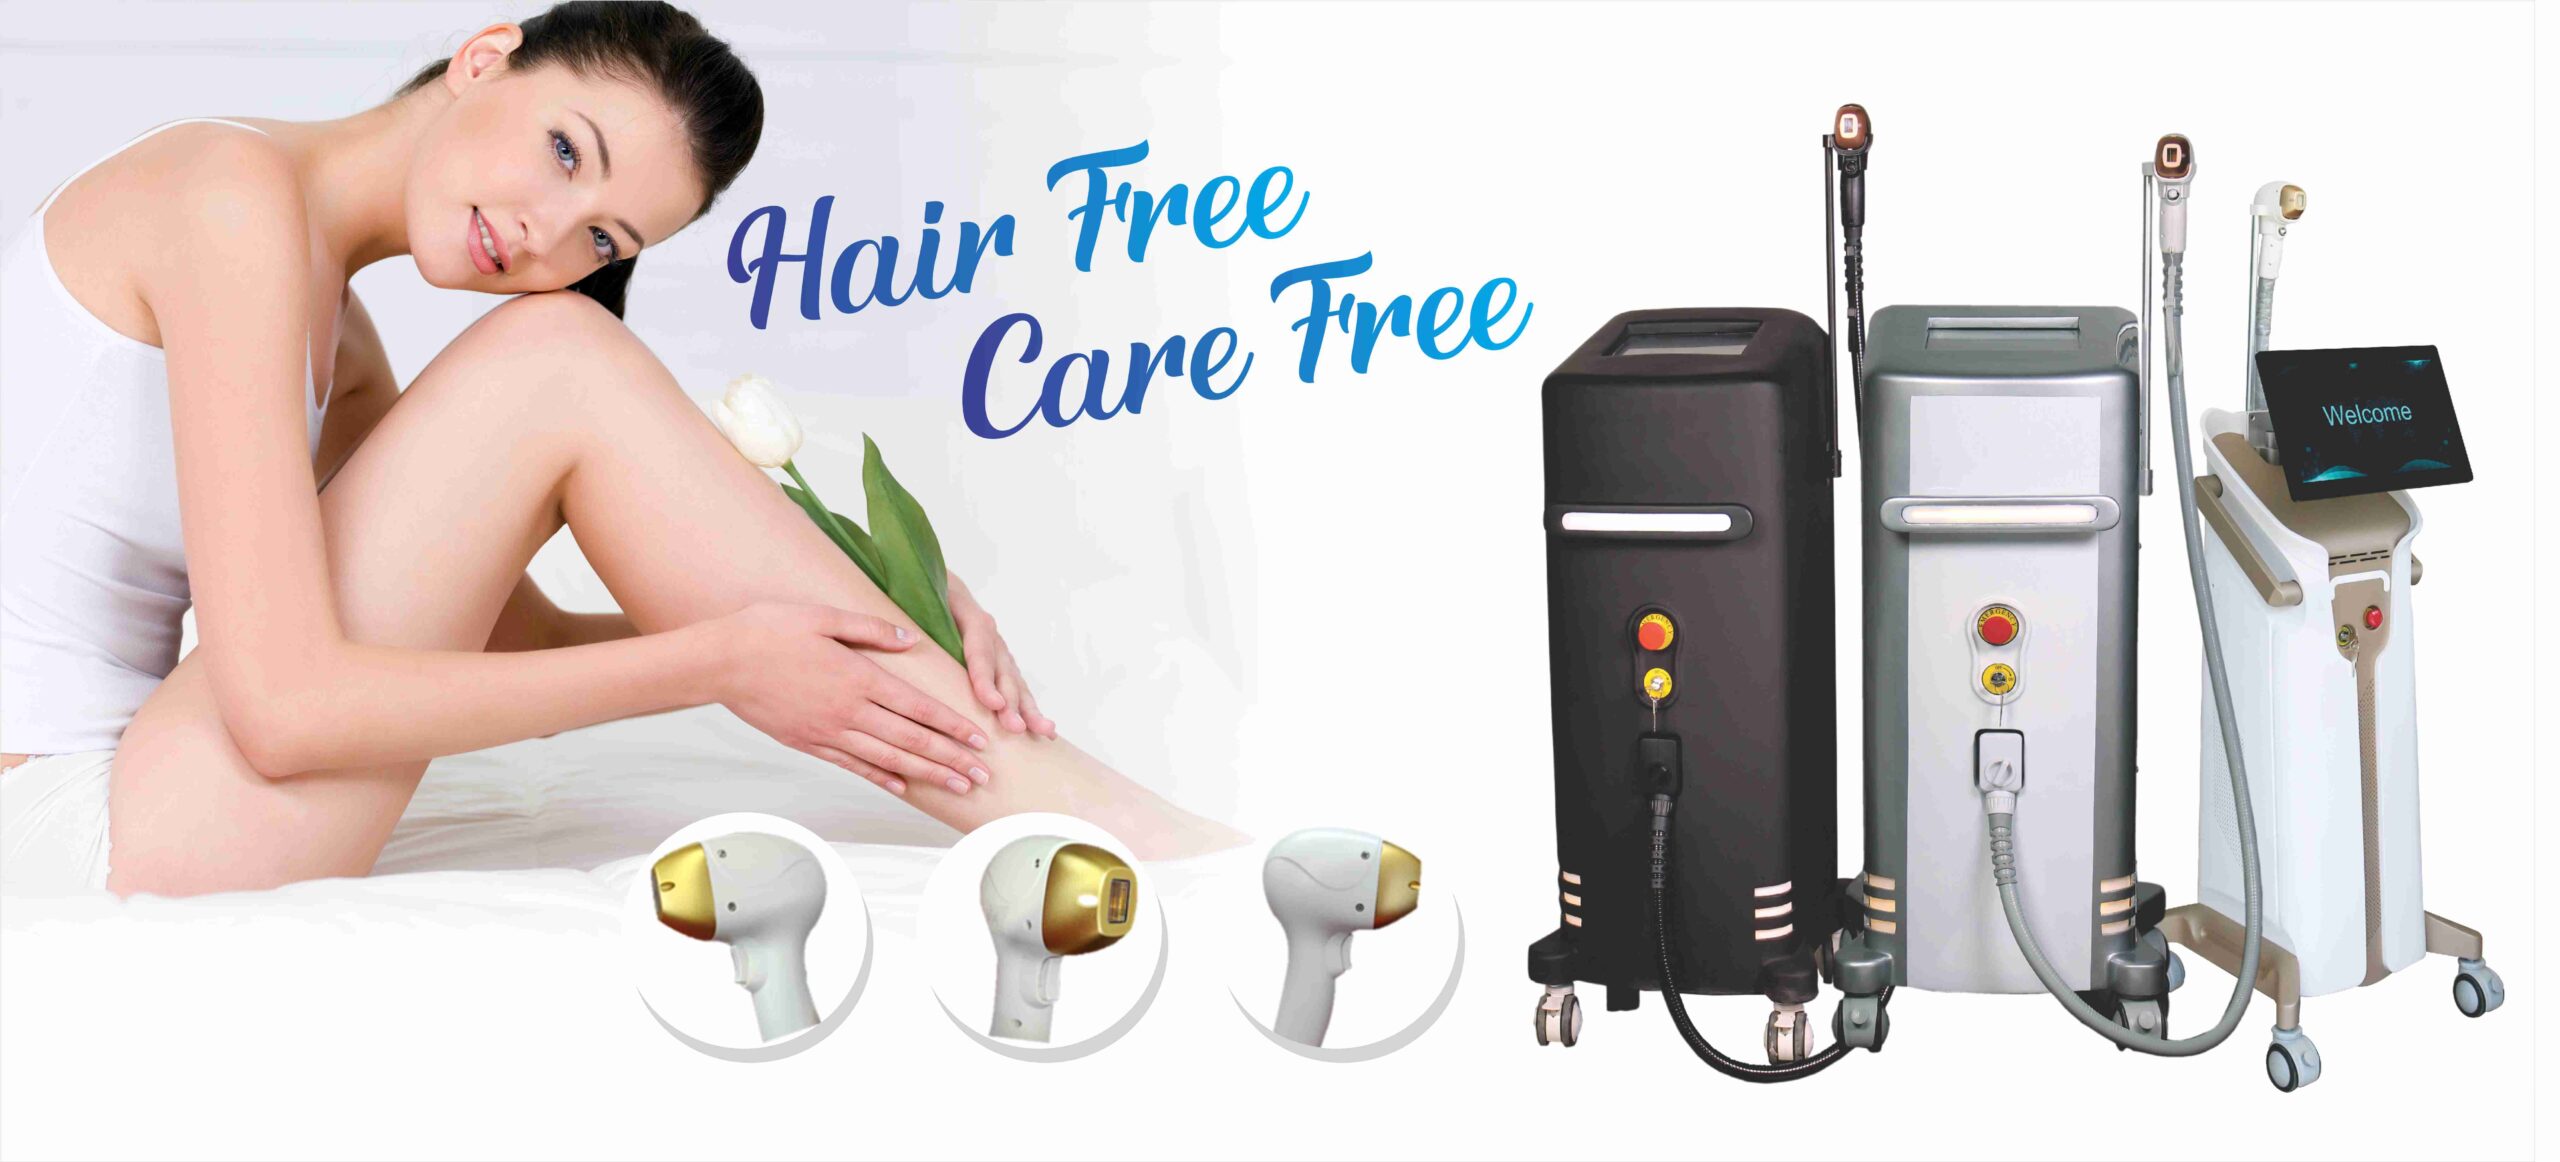 hair-free-care-free sparsh-skin-lasers